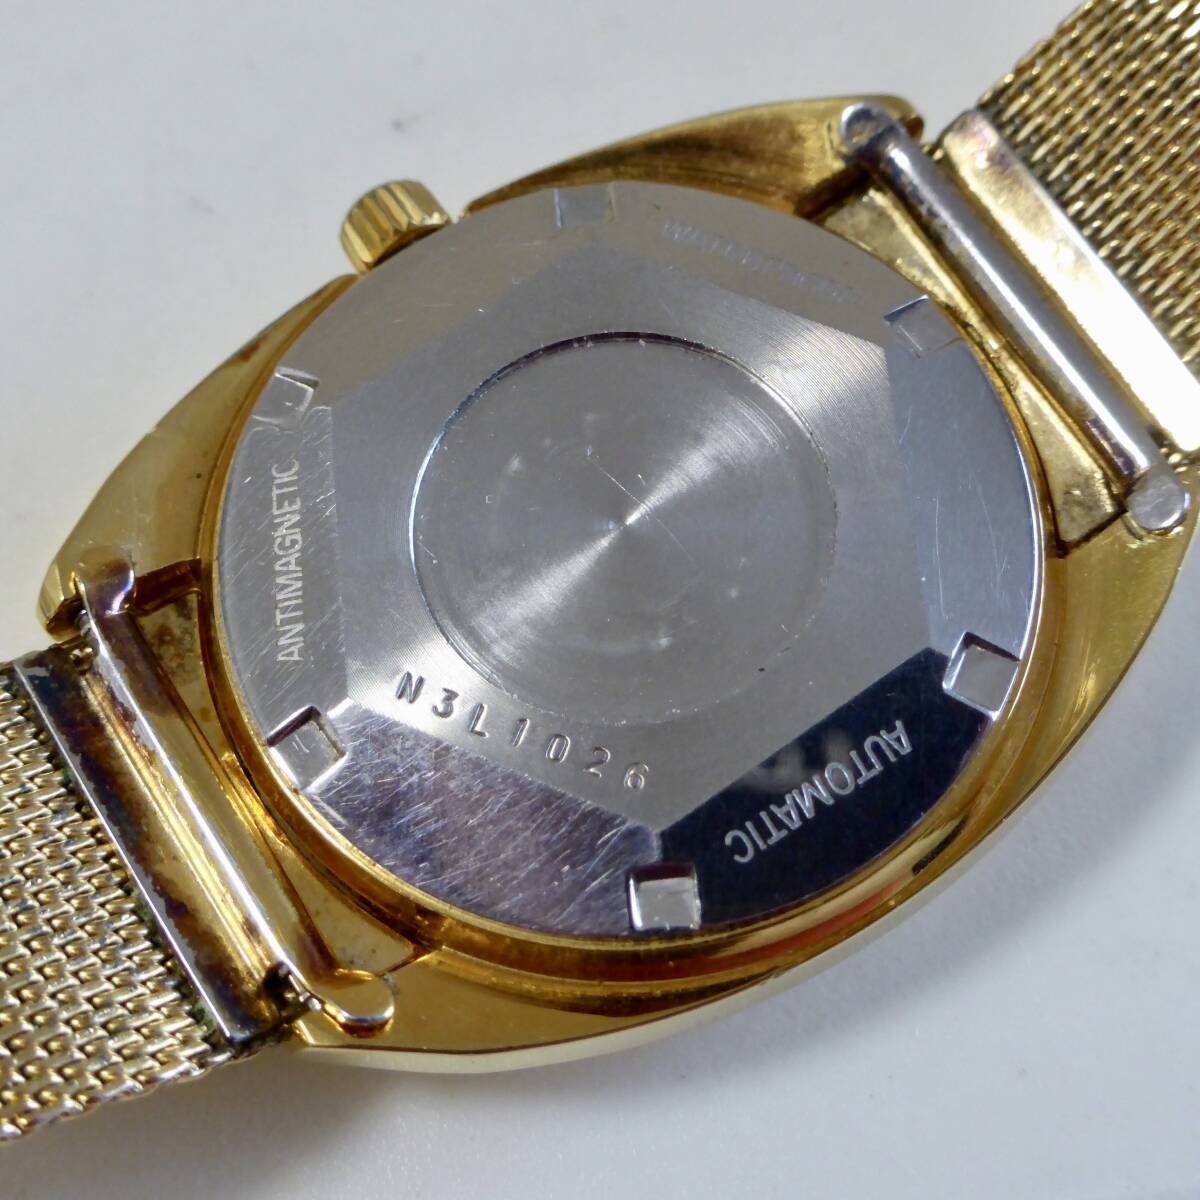 !TECHNOS Tecnos skylight Sky Light self-winding watch men's wristwatch Gold original breath attaching glass beautiful beautiful goods 